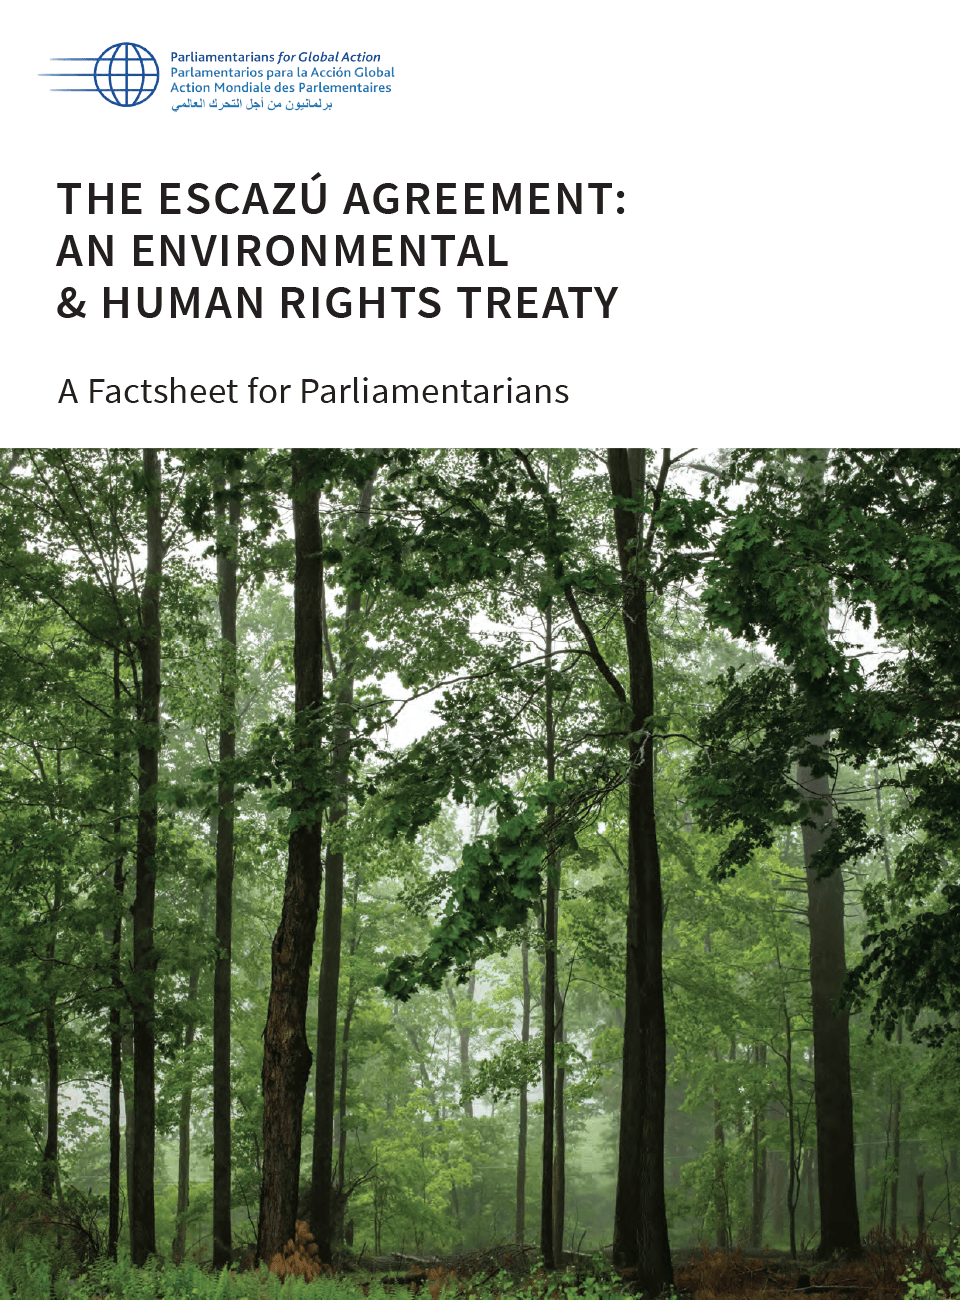 Factsheet for Parliamentarians: The Escazú Agreement, an Environmental and Human Rights Treaty